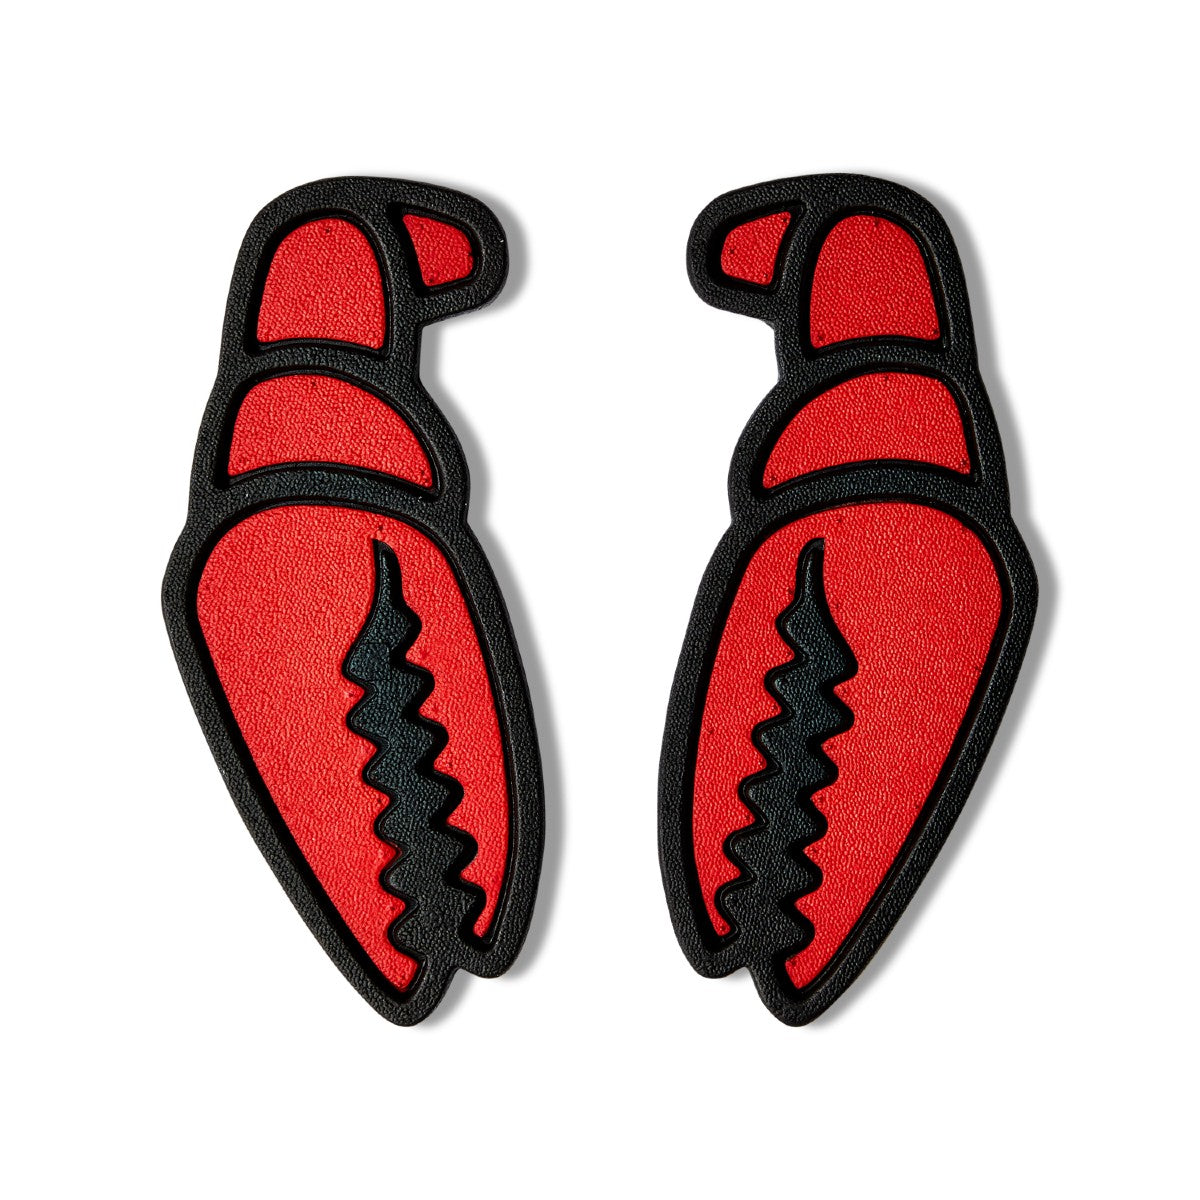 Crab Grab - Mega Claw - Black / Red